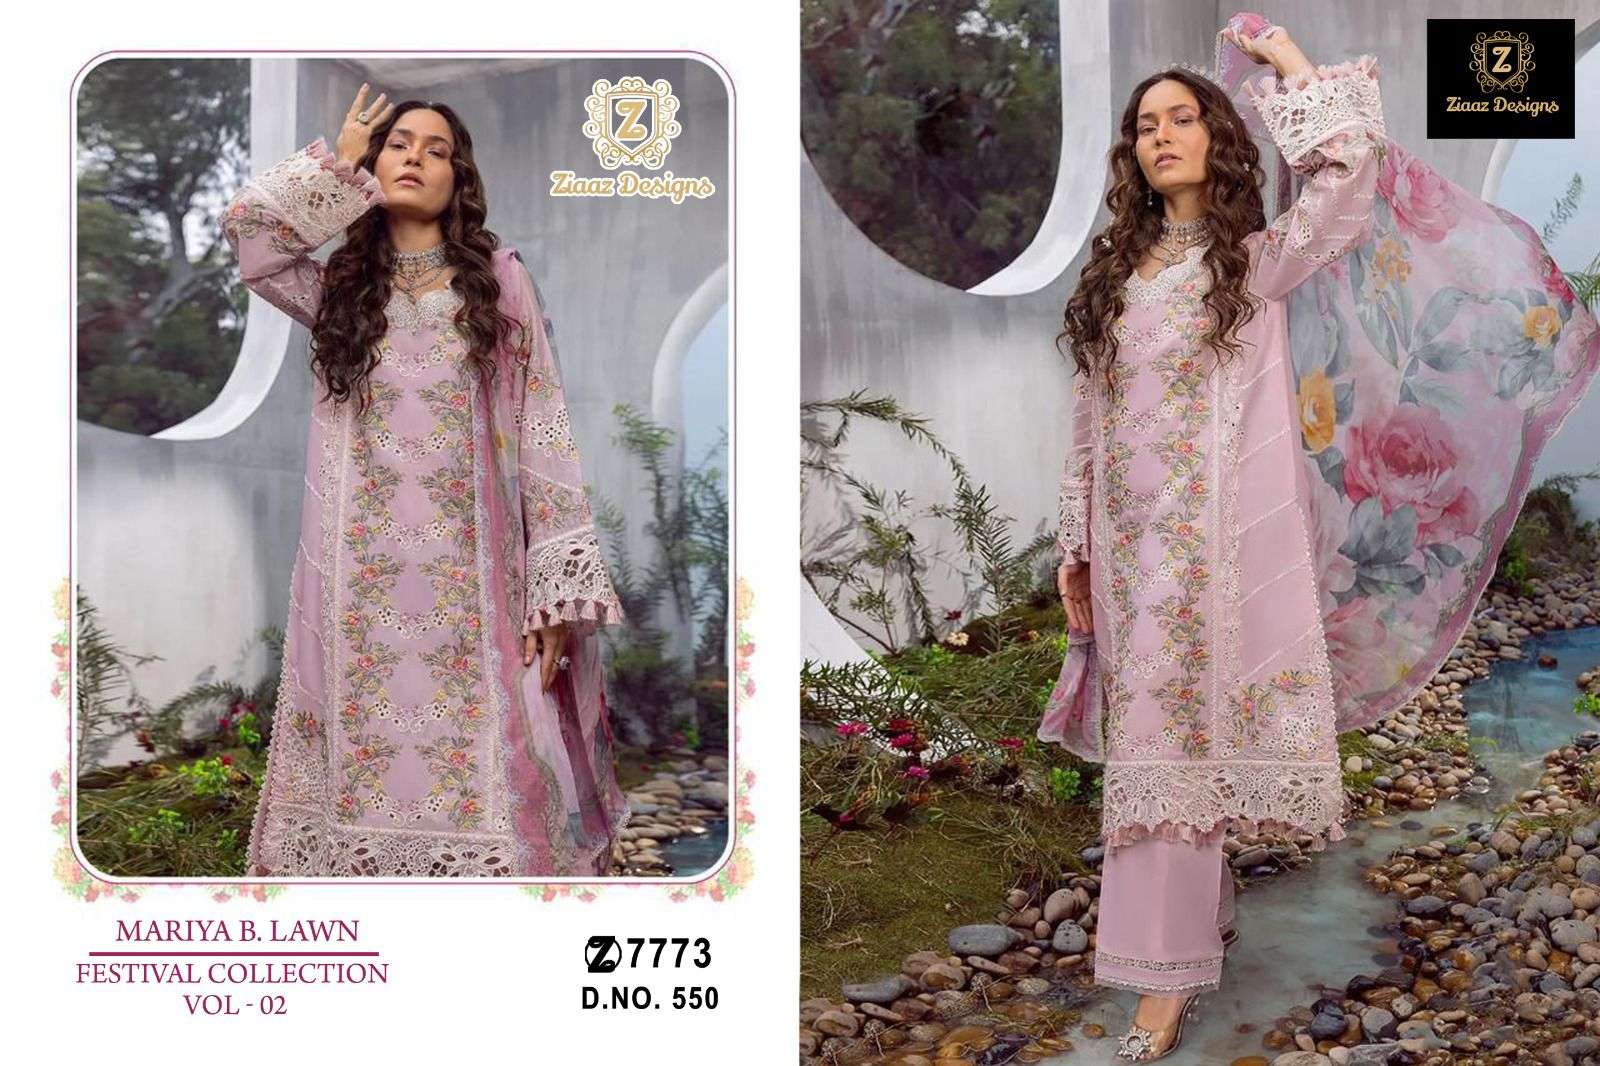 Ziaaz Designs 550 Fancy Designer Embroidered Salwar Kameez Online Suppliers